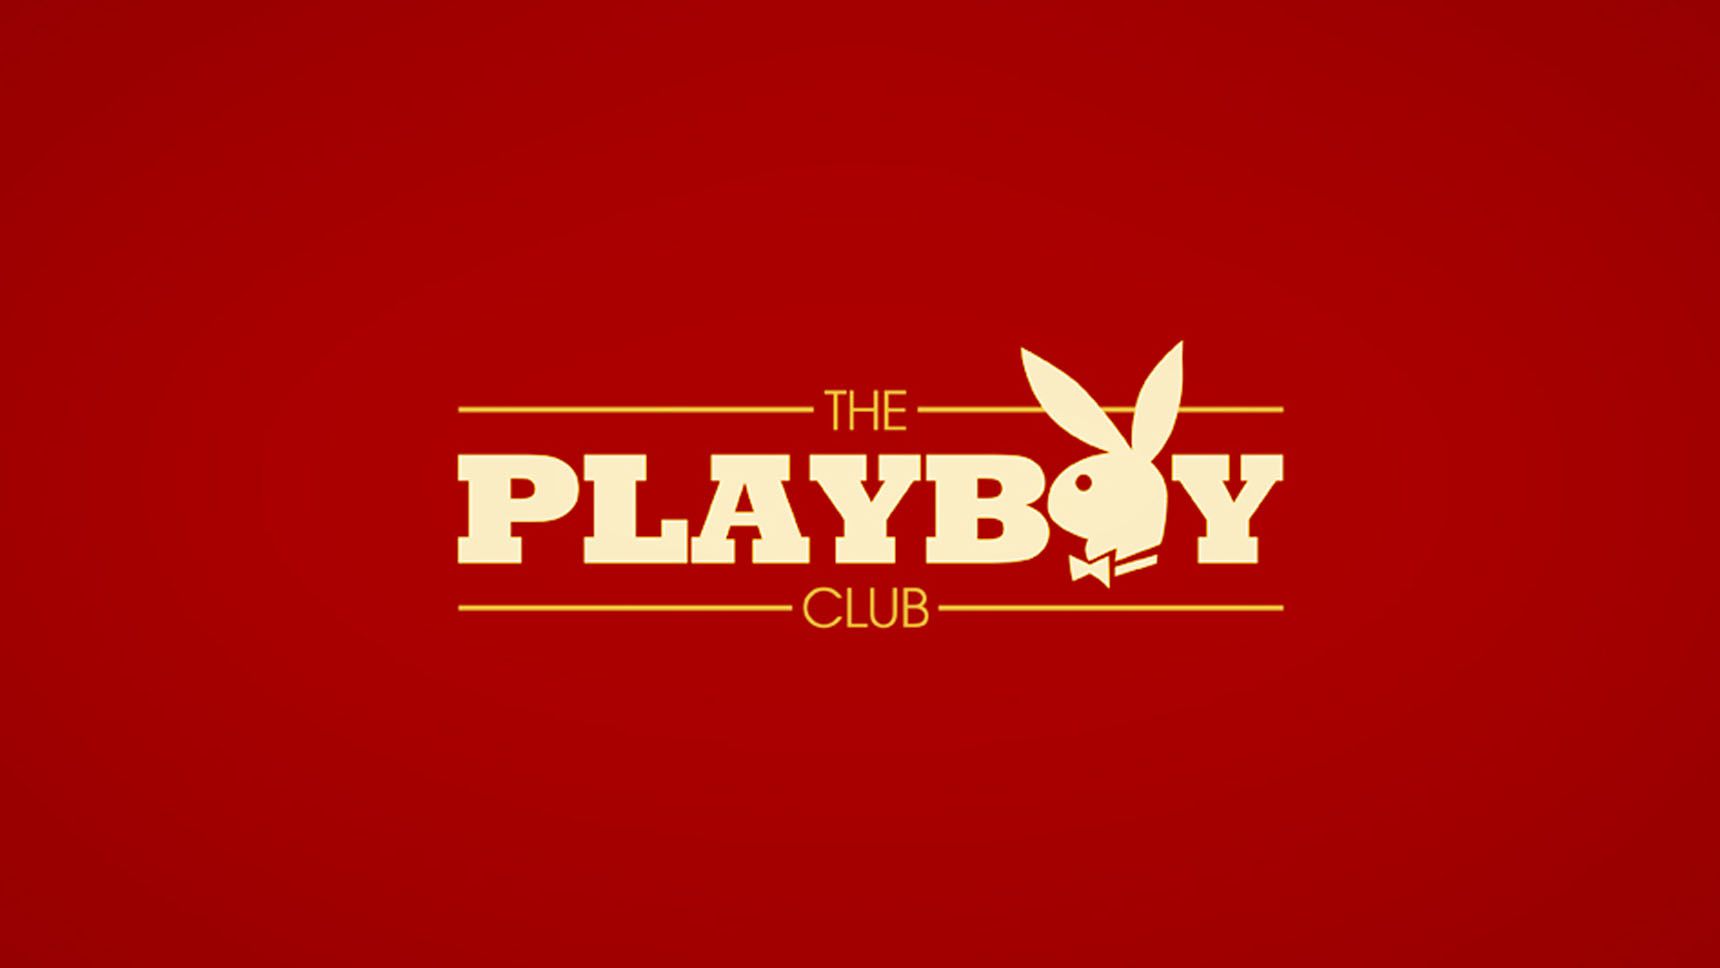 The Recruiter Playboy